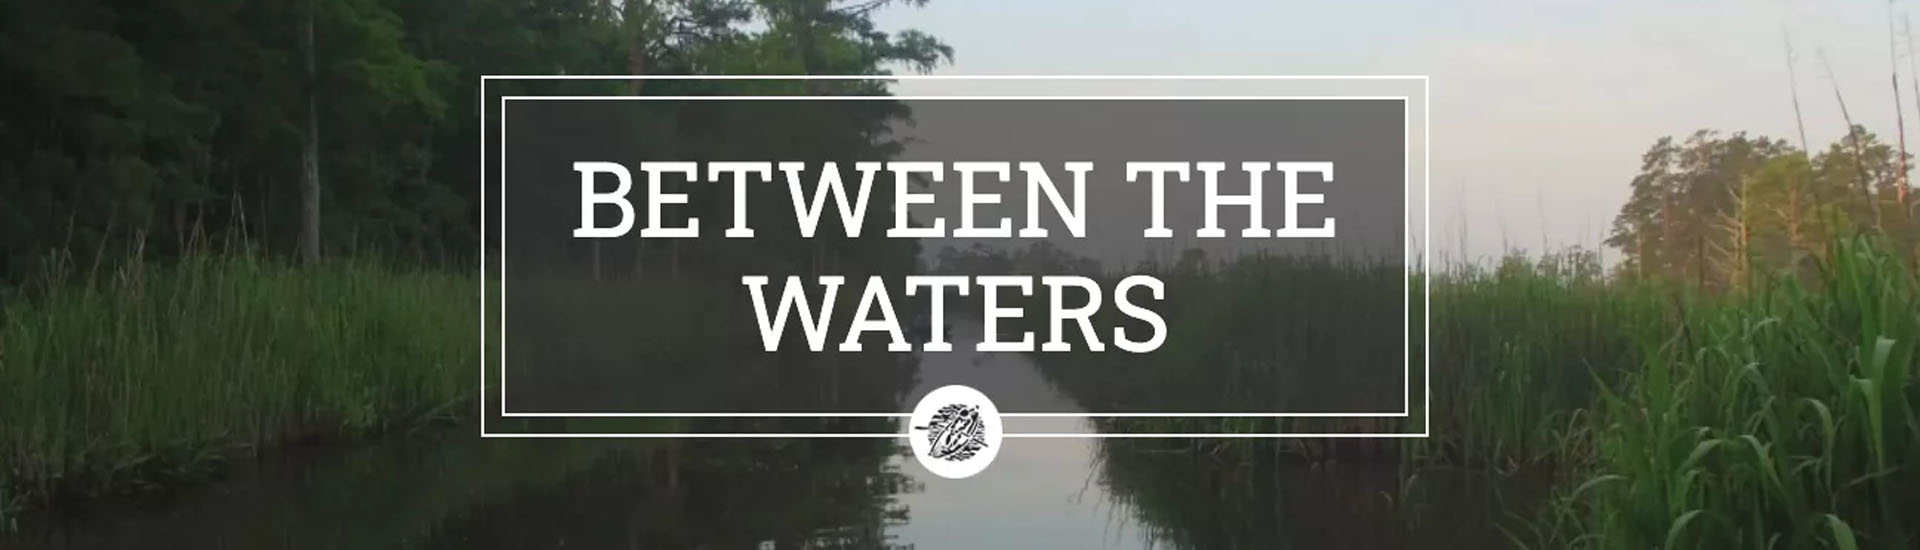 Between the Waters